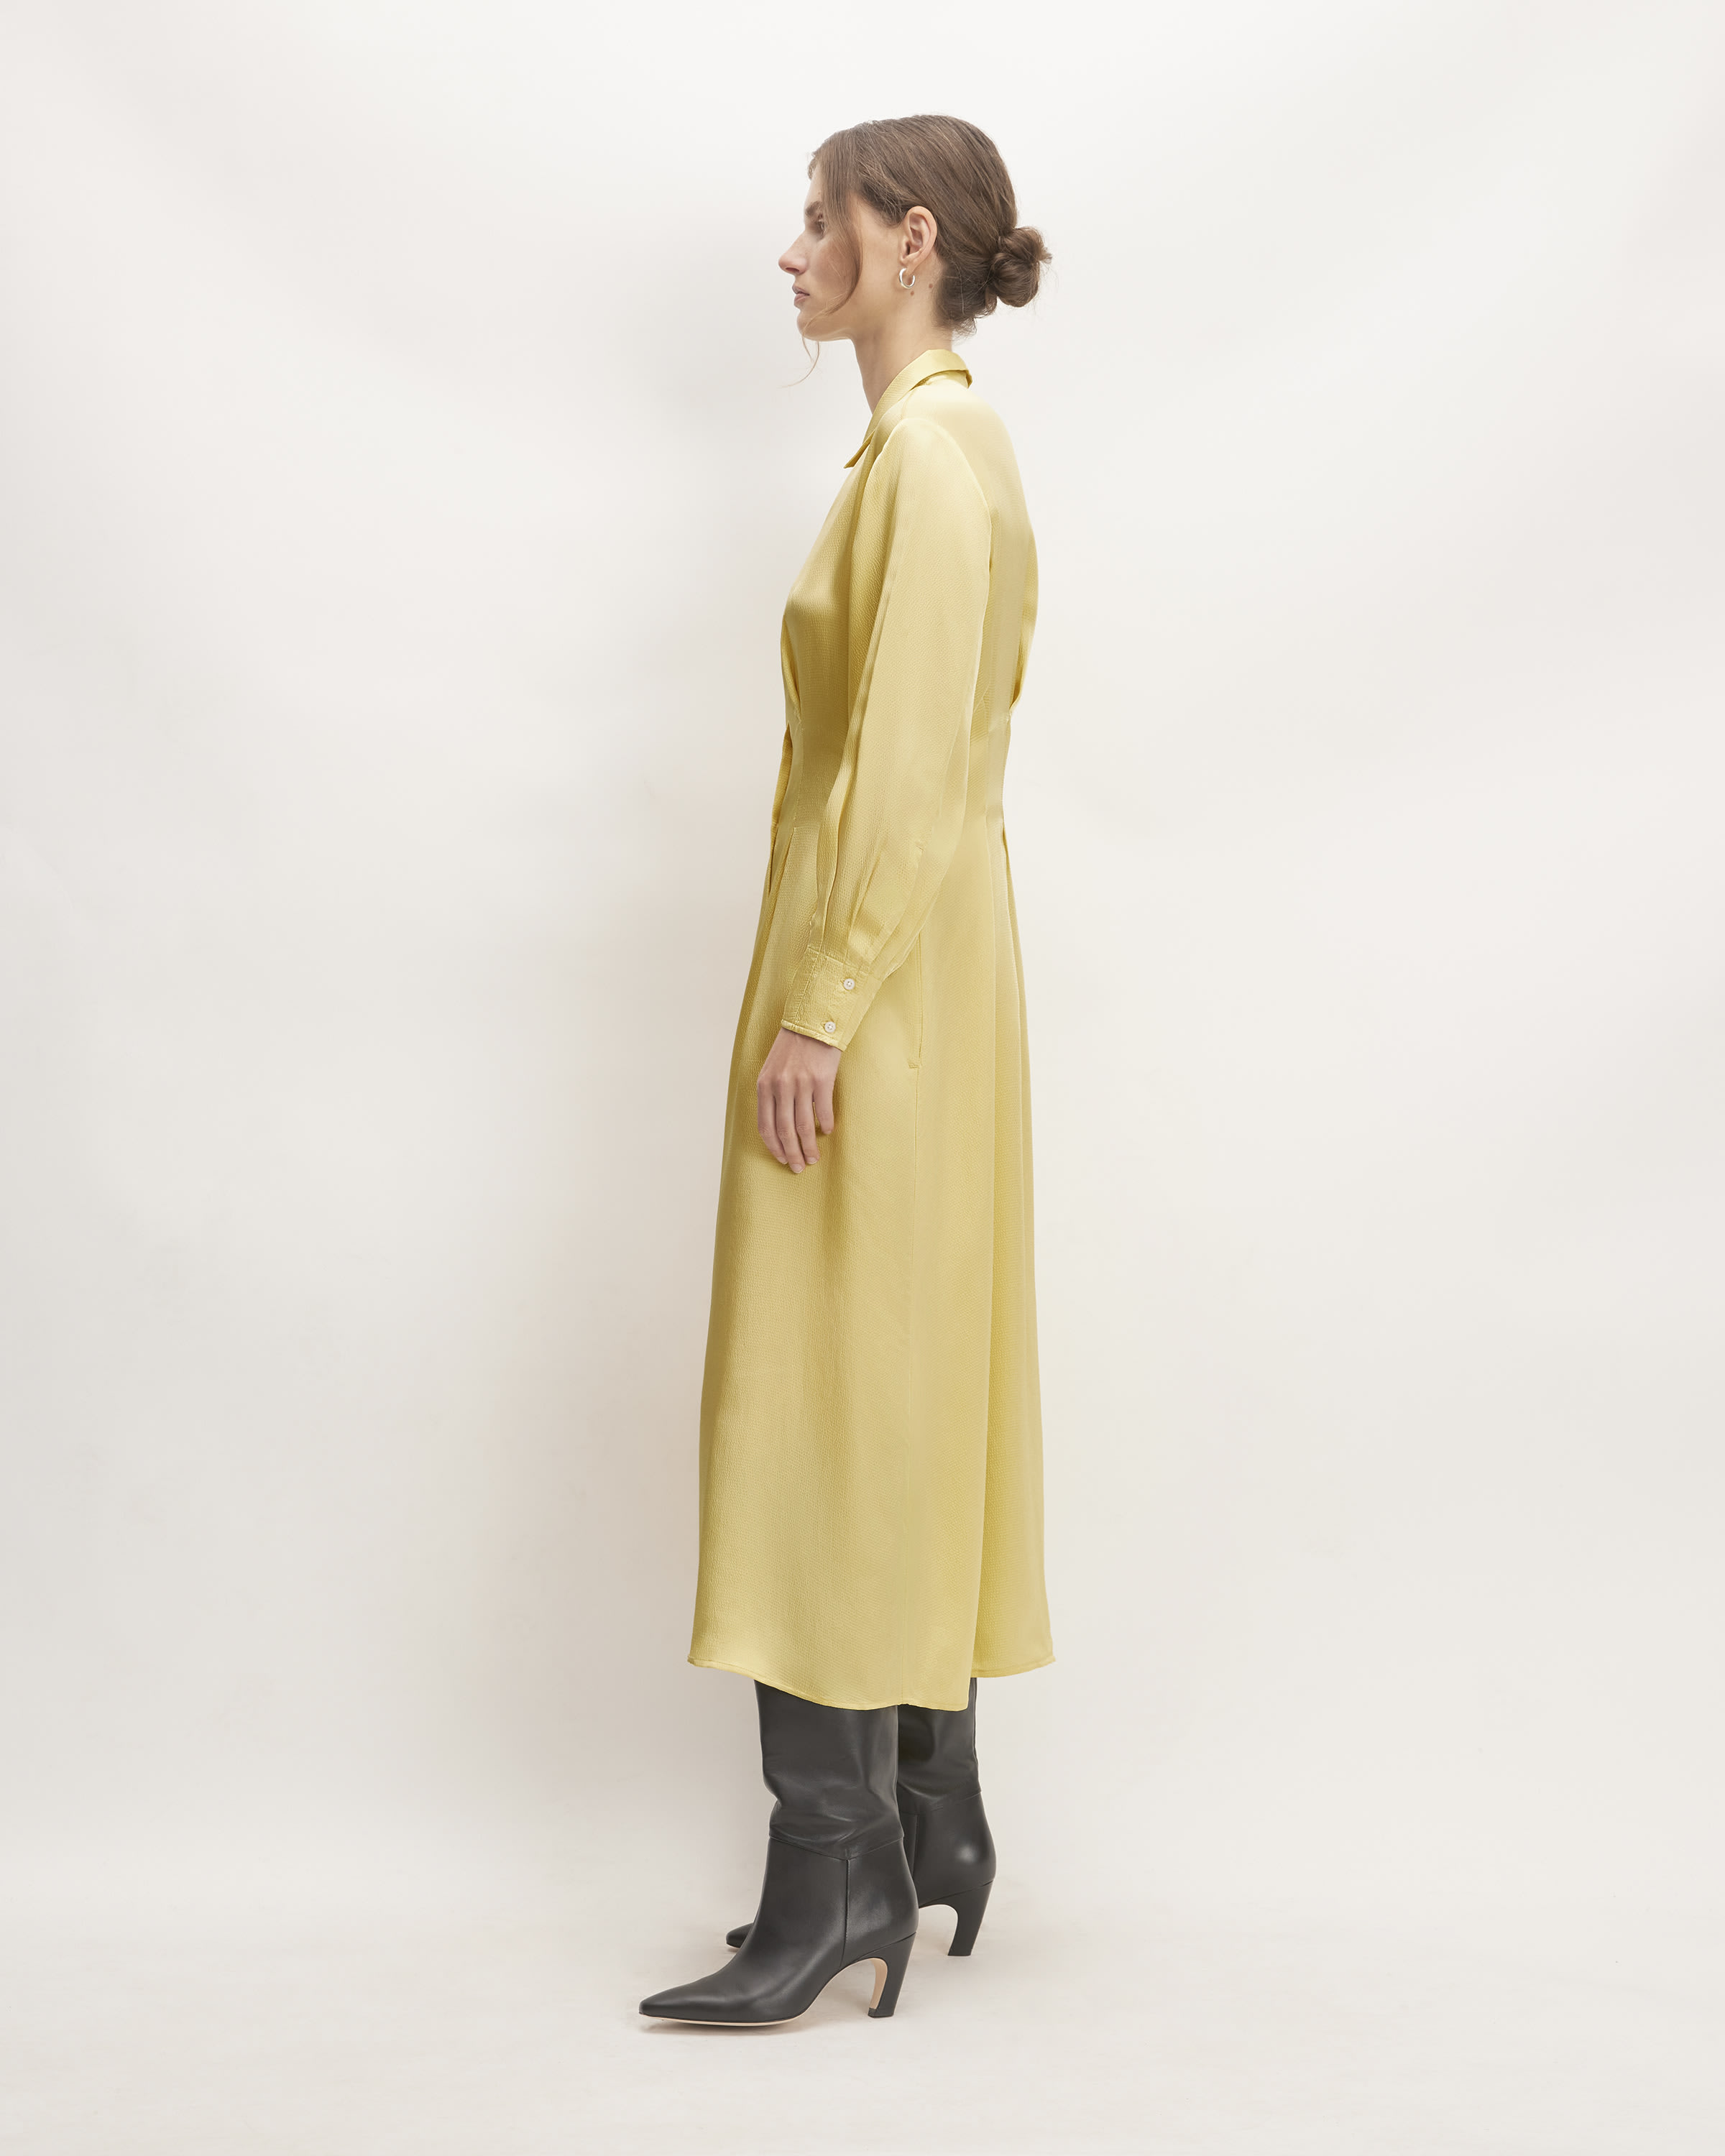 Everlane Women's Hammered Satin Shirt Dress in Raffia, Size 6